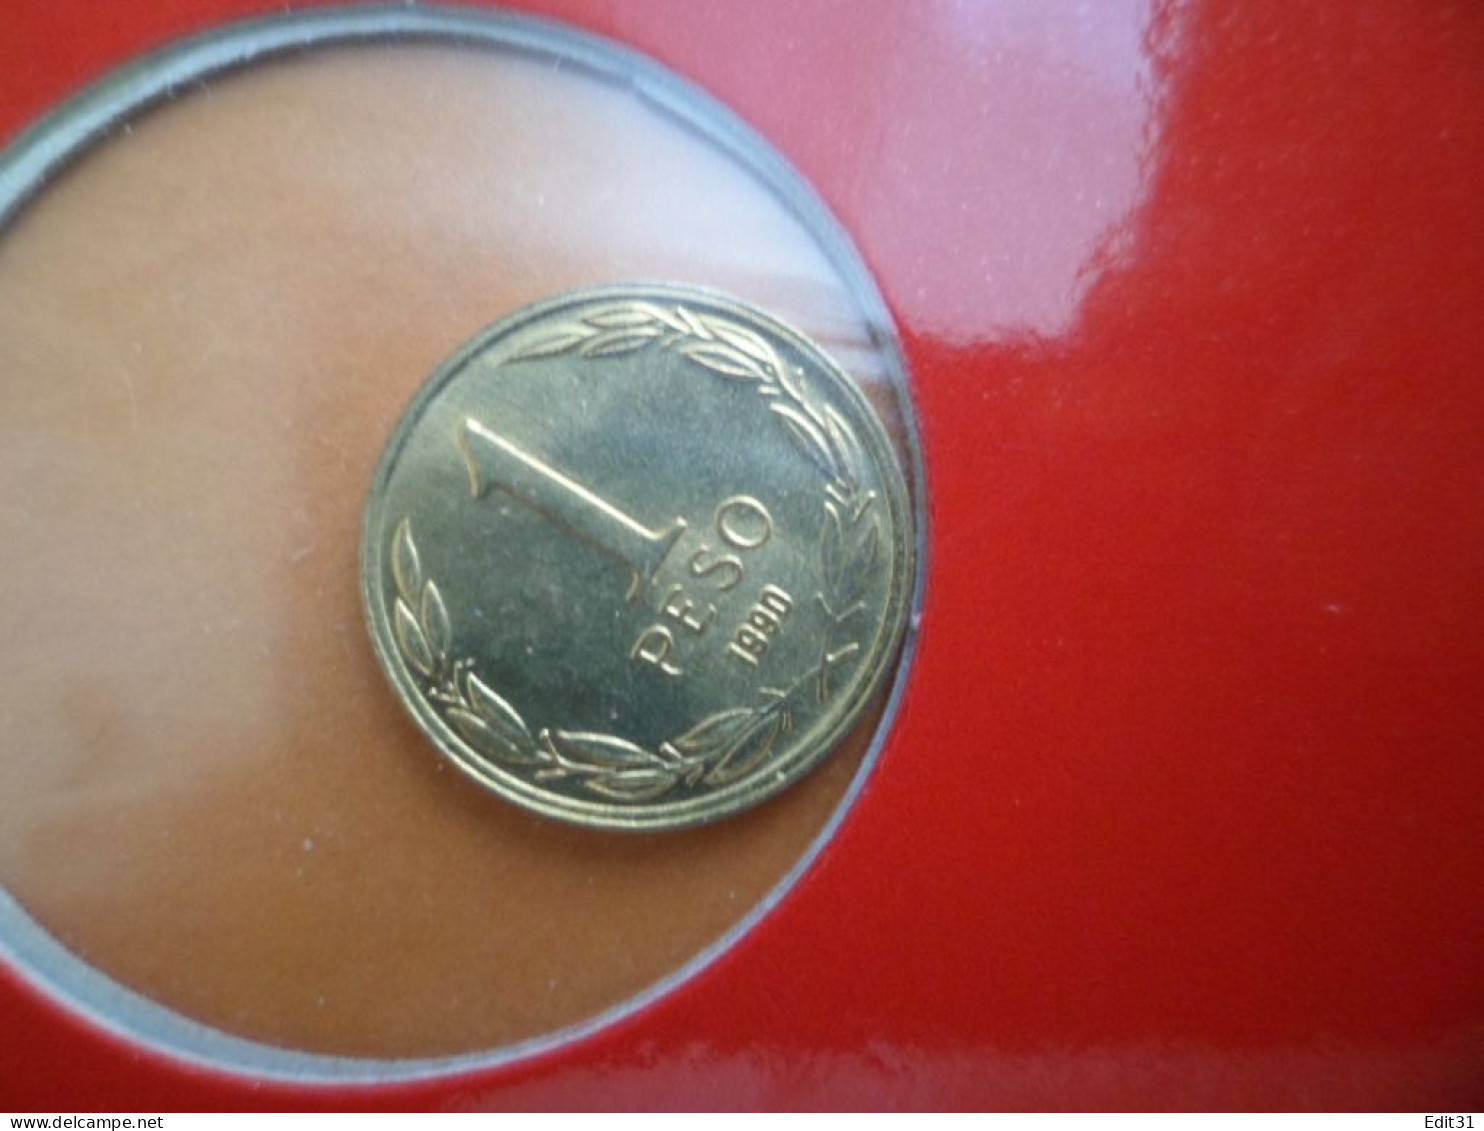 Monnaie - Sous Blister , CHILI - 1 Peso - Chili